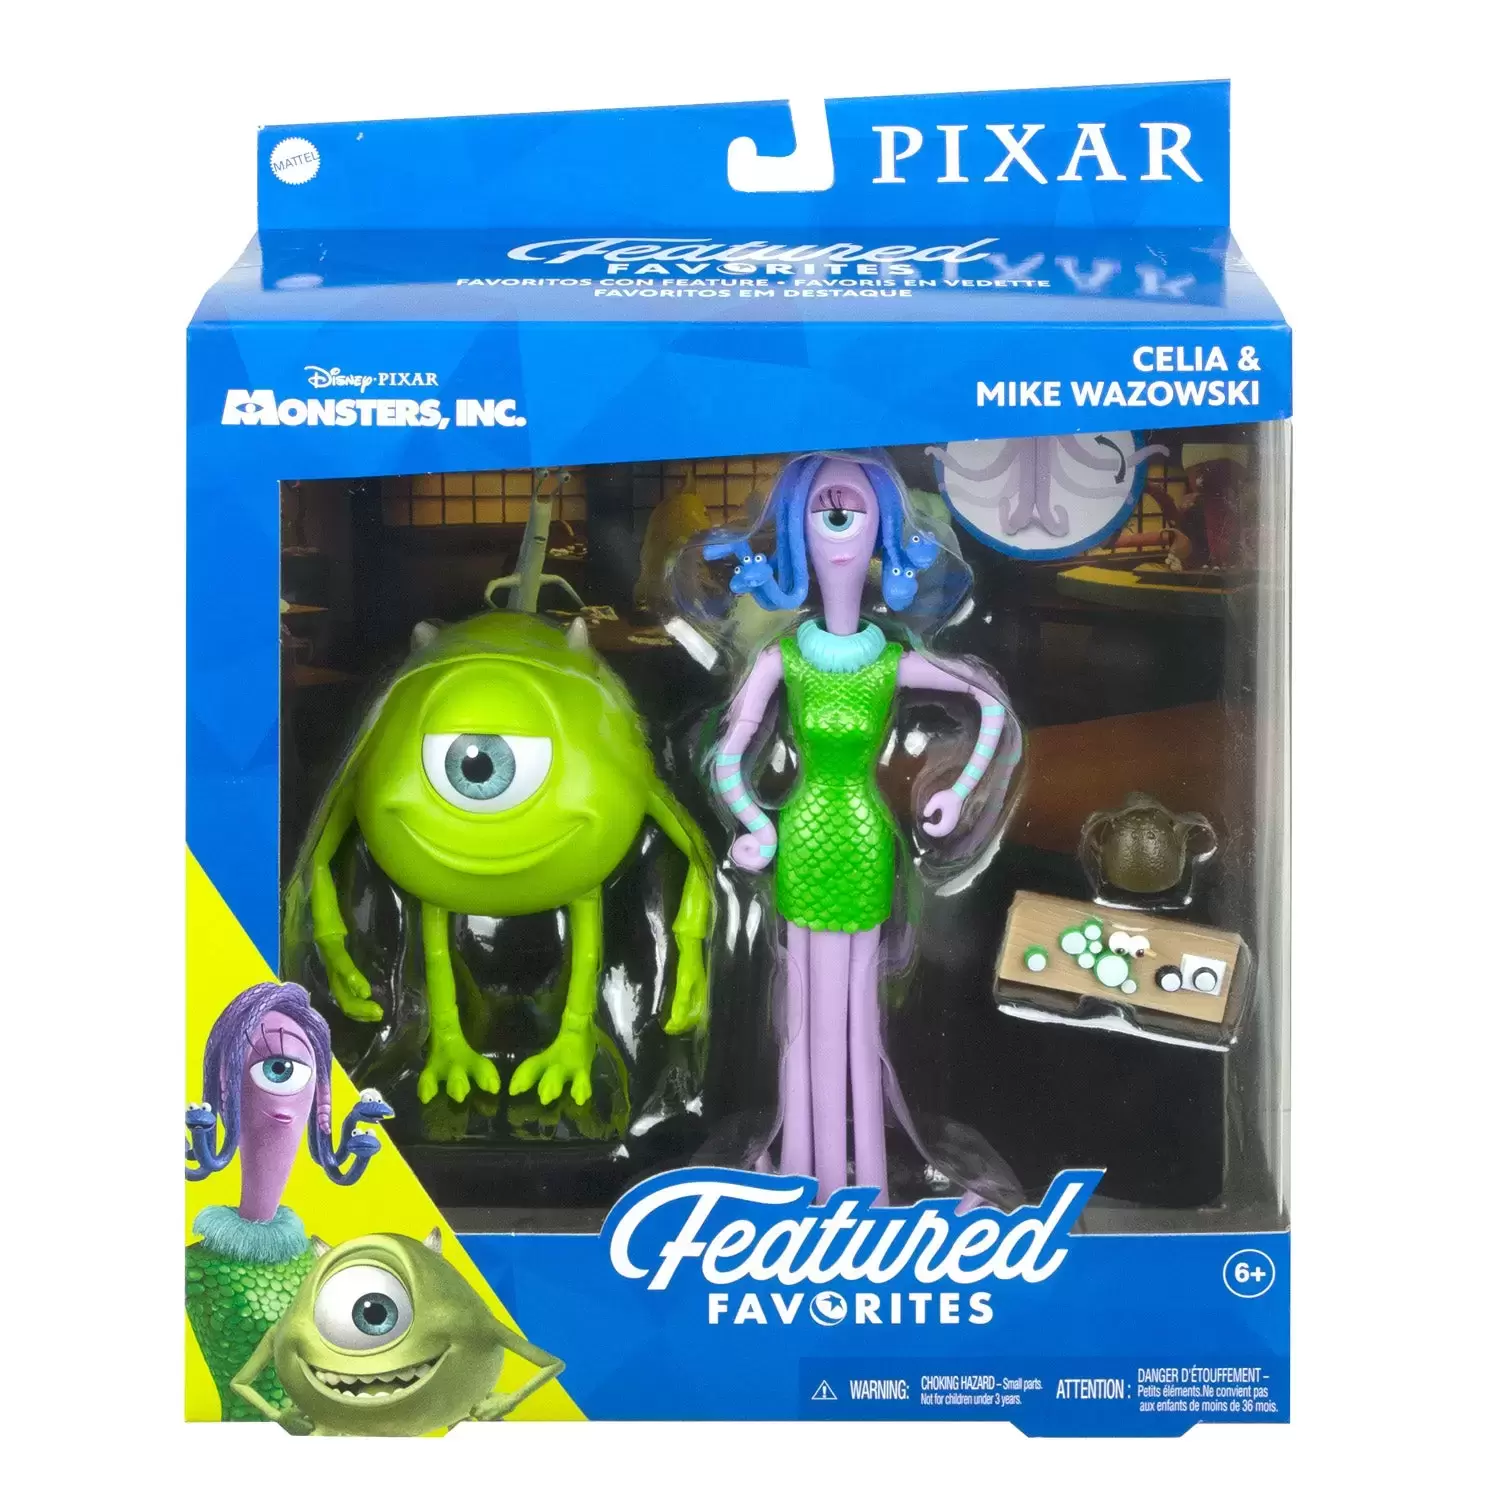 Pixar Action Figures - Mattel - Featured Favorites - Celia Mae & Mike Wazowski